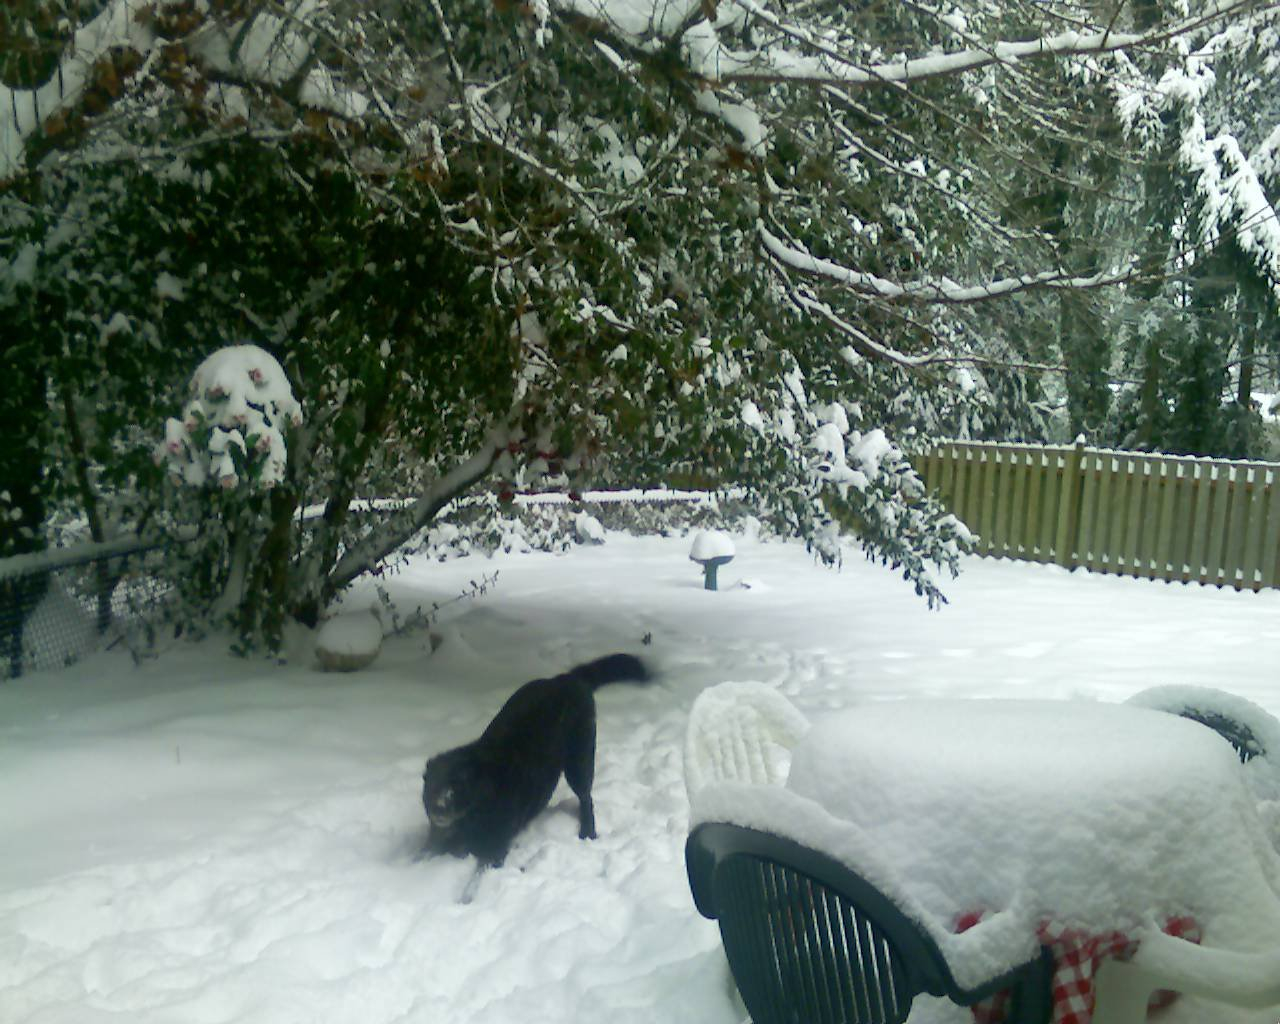 Bear in Snow, Lake Oswego